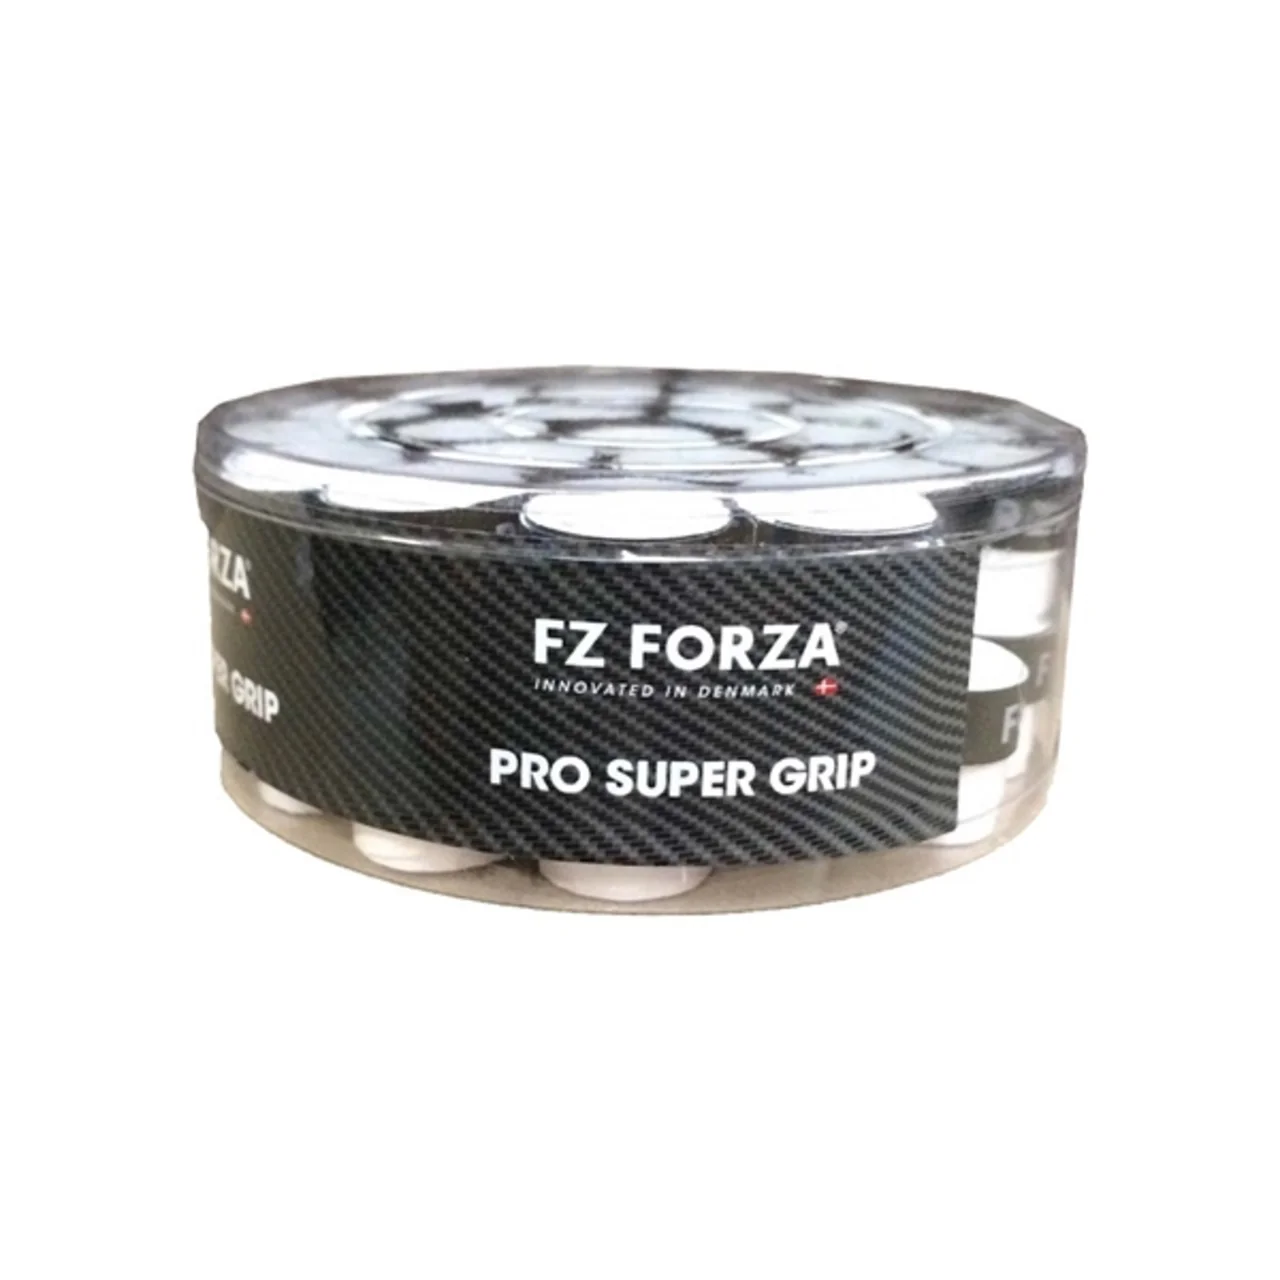 FZ Forza Pro Super Grip x40 Box